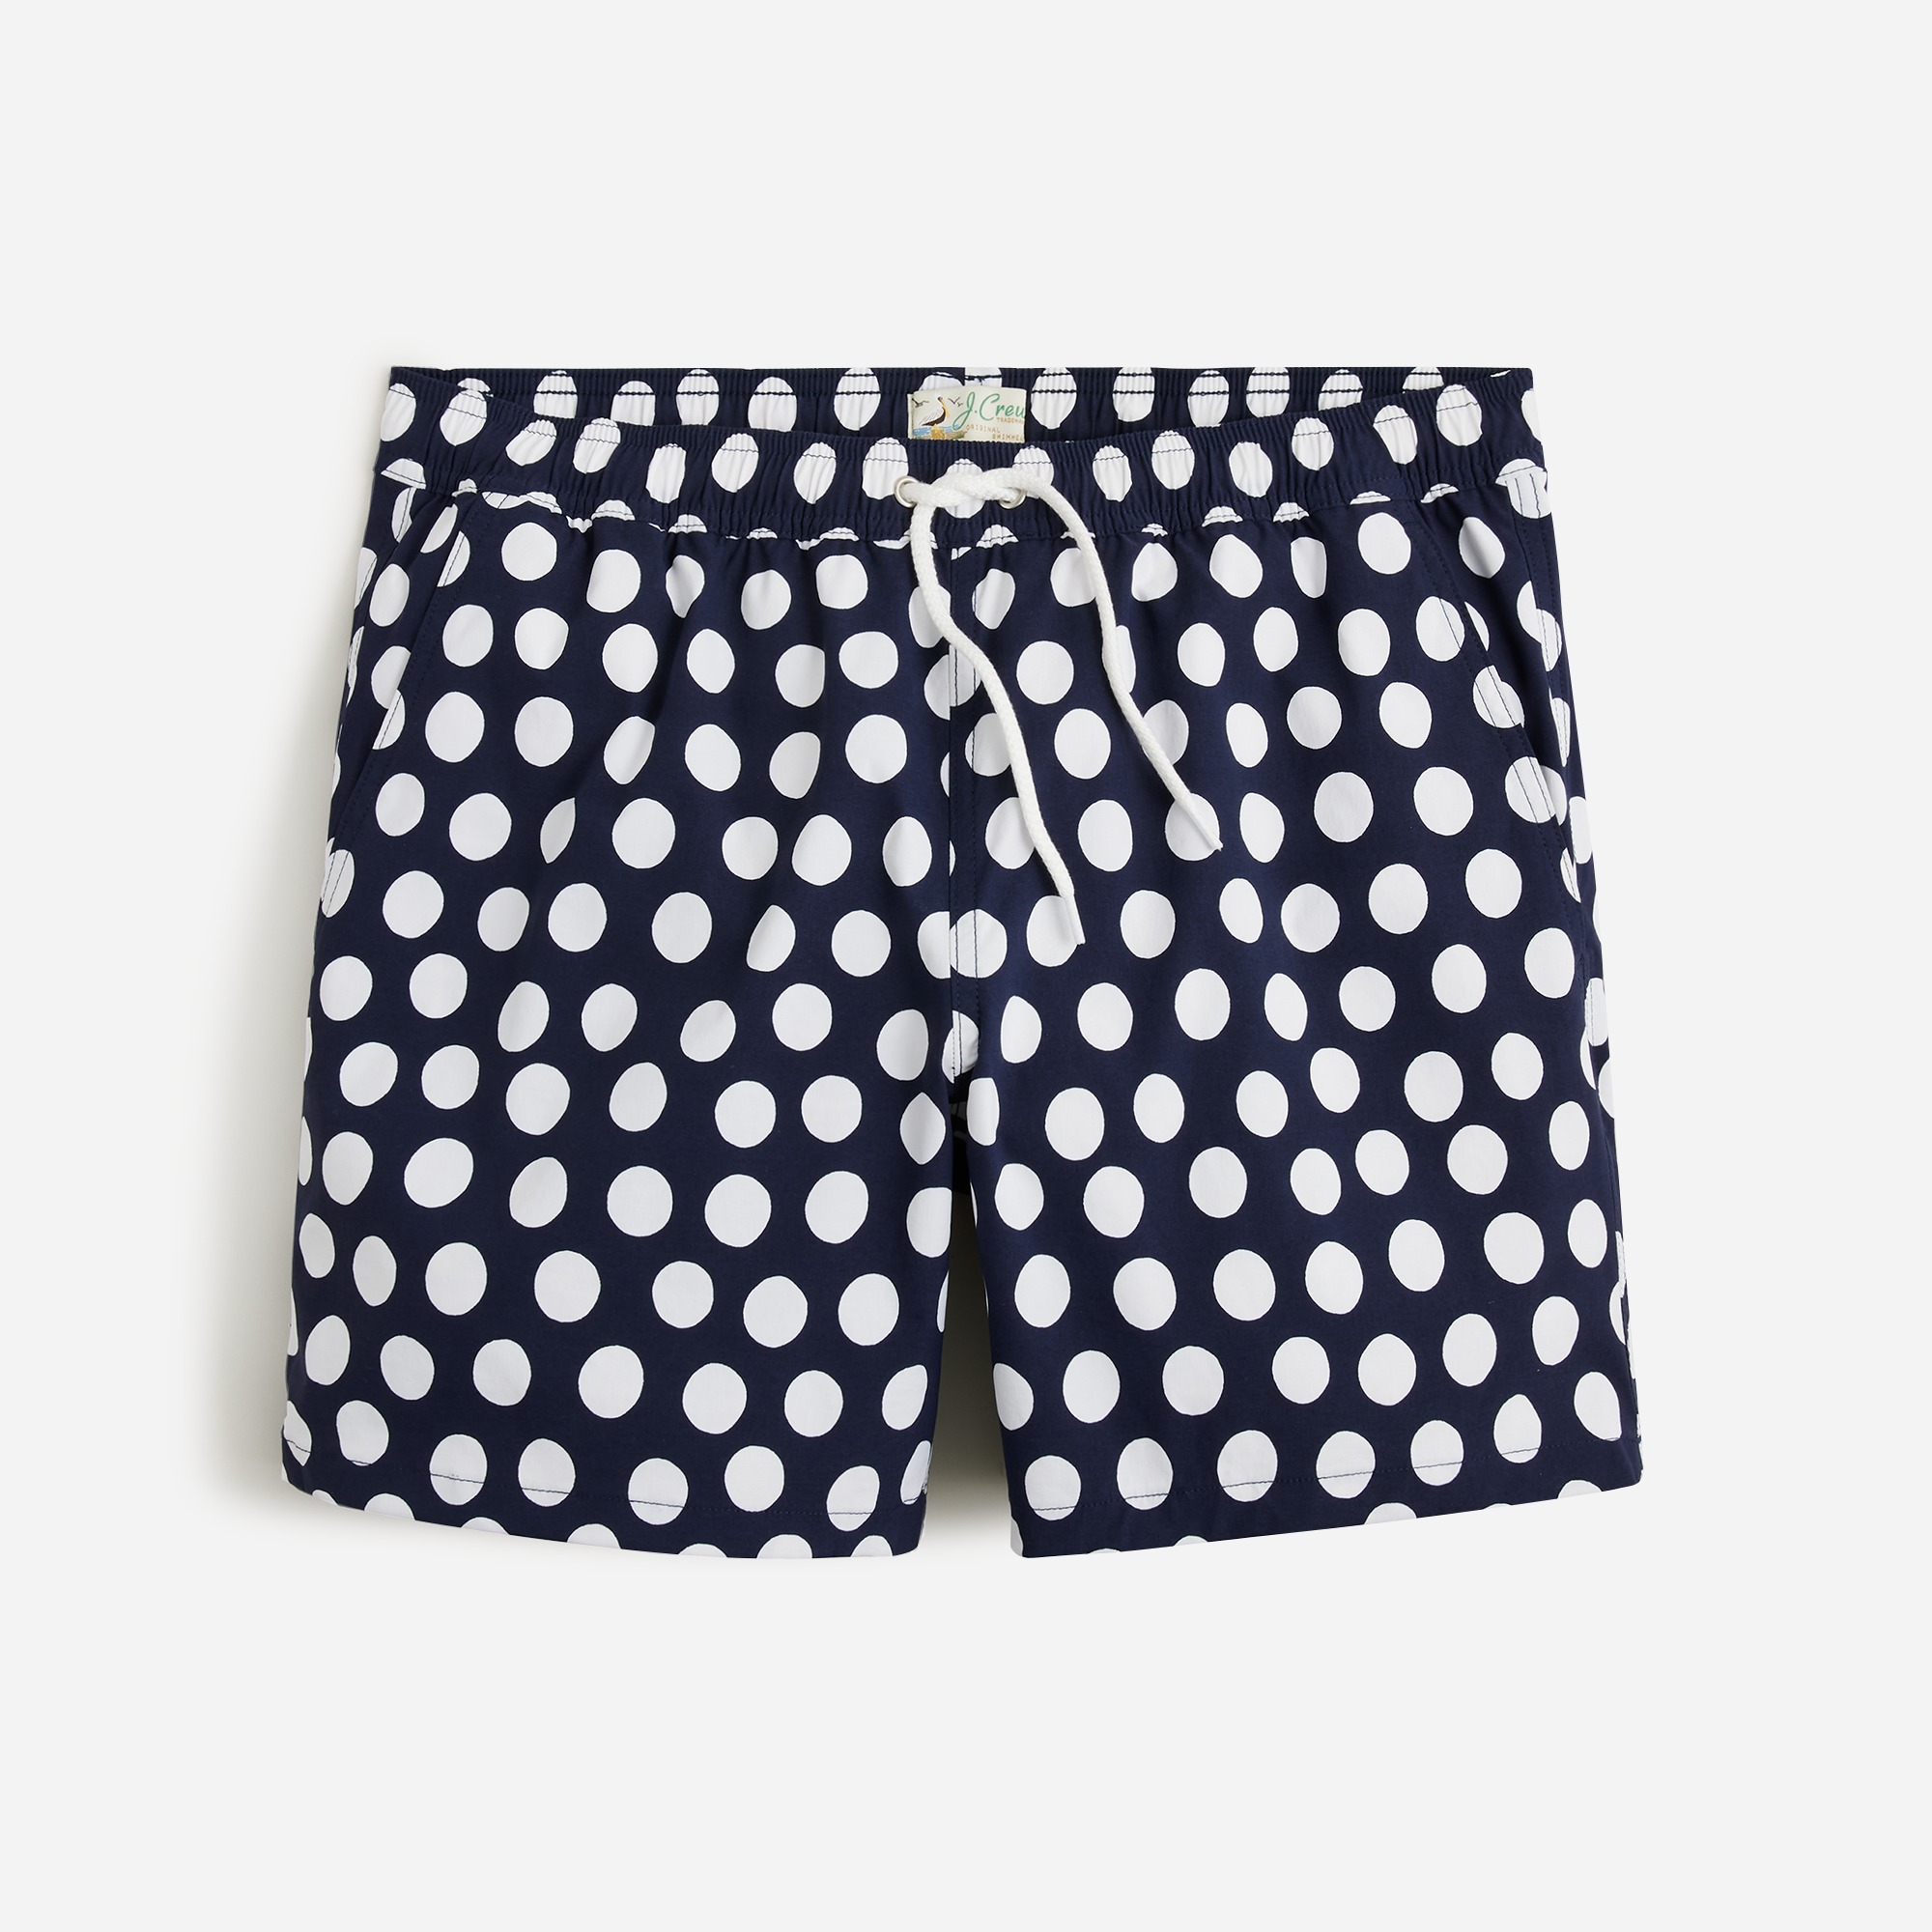  6'' stretch swim trunk in polka-dot print with ECONYL&reg; nylon